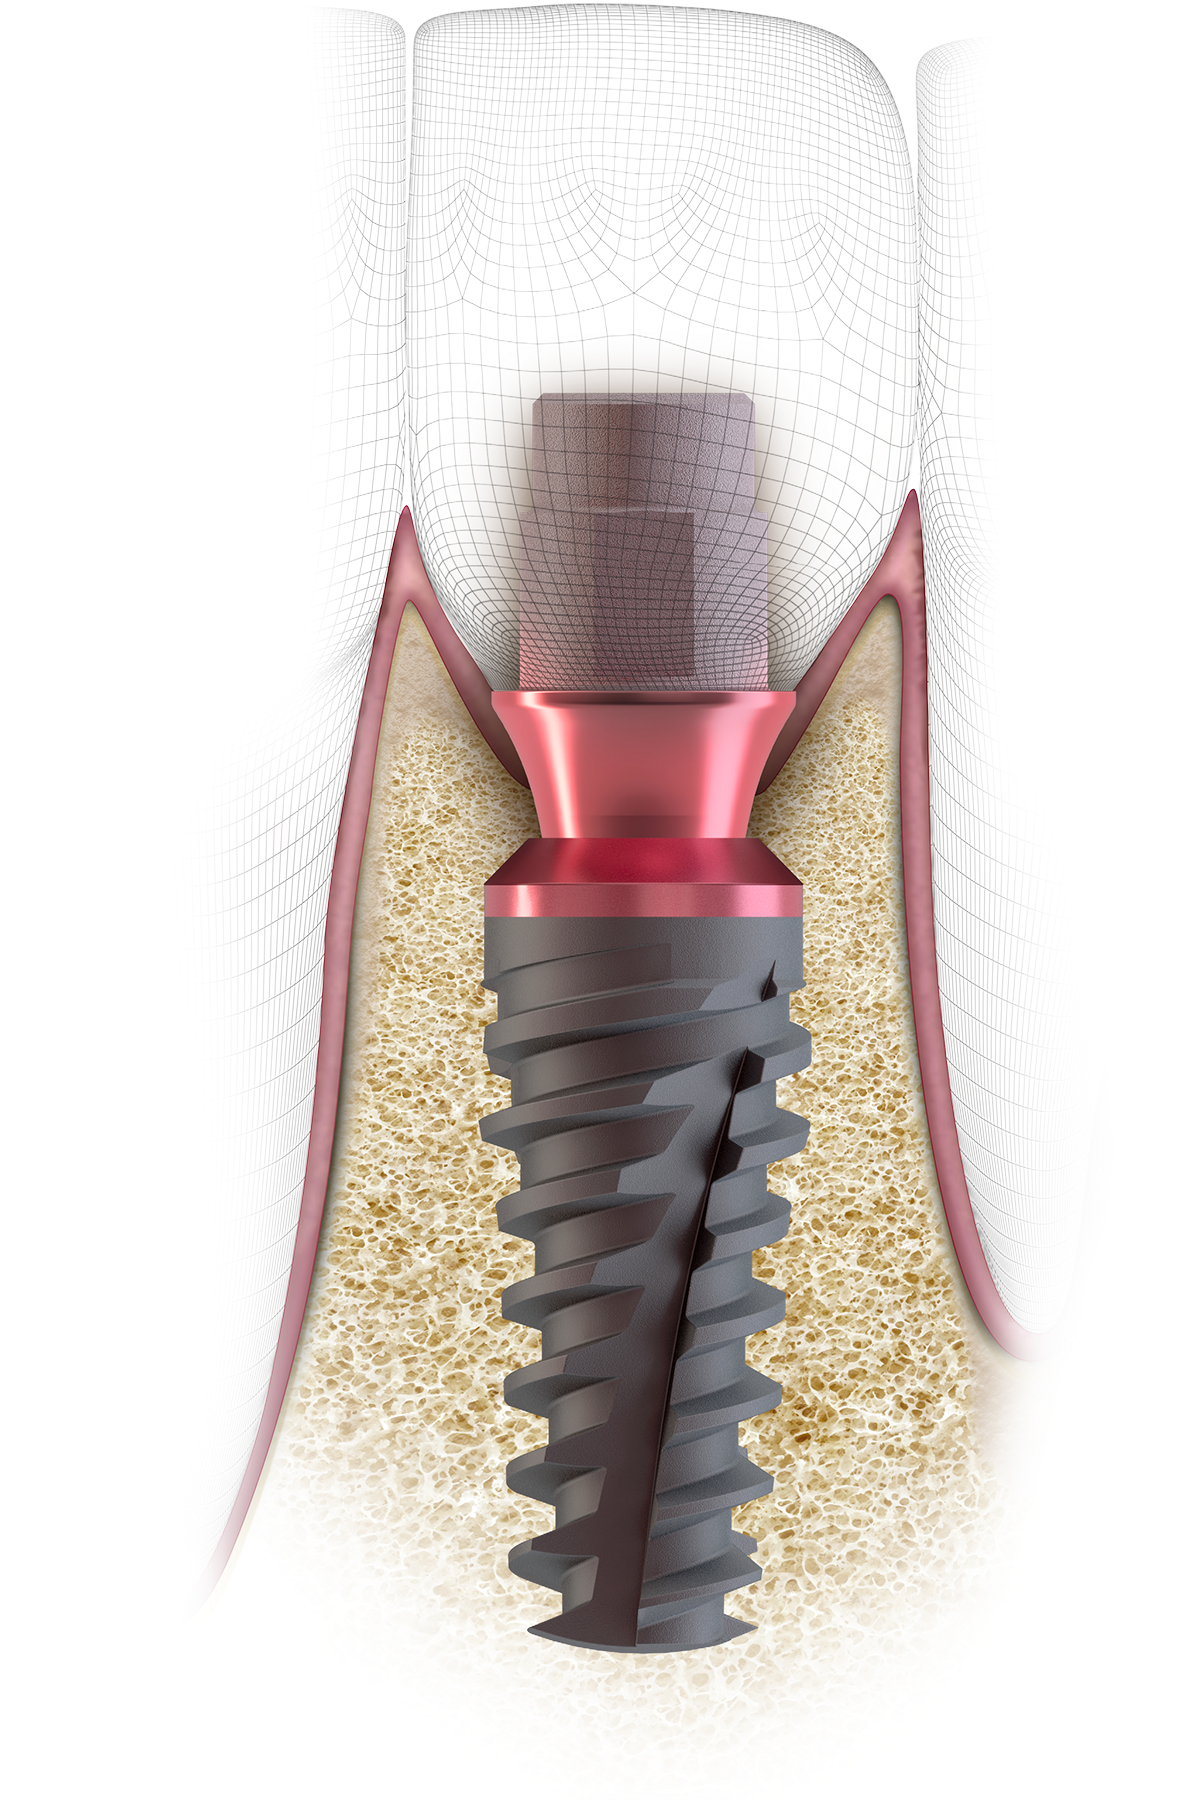 GENESIS ACTIVE Implant System from Keystone Dental | Image Credit: © Keystone Dental Holdings